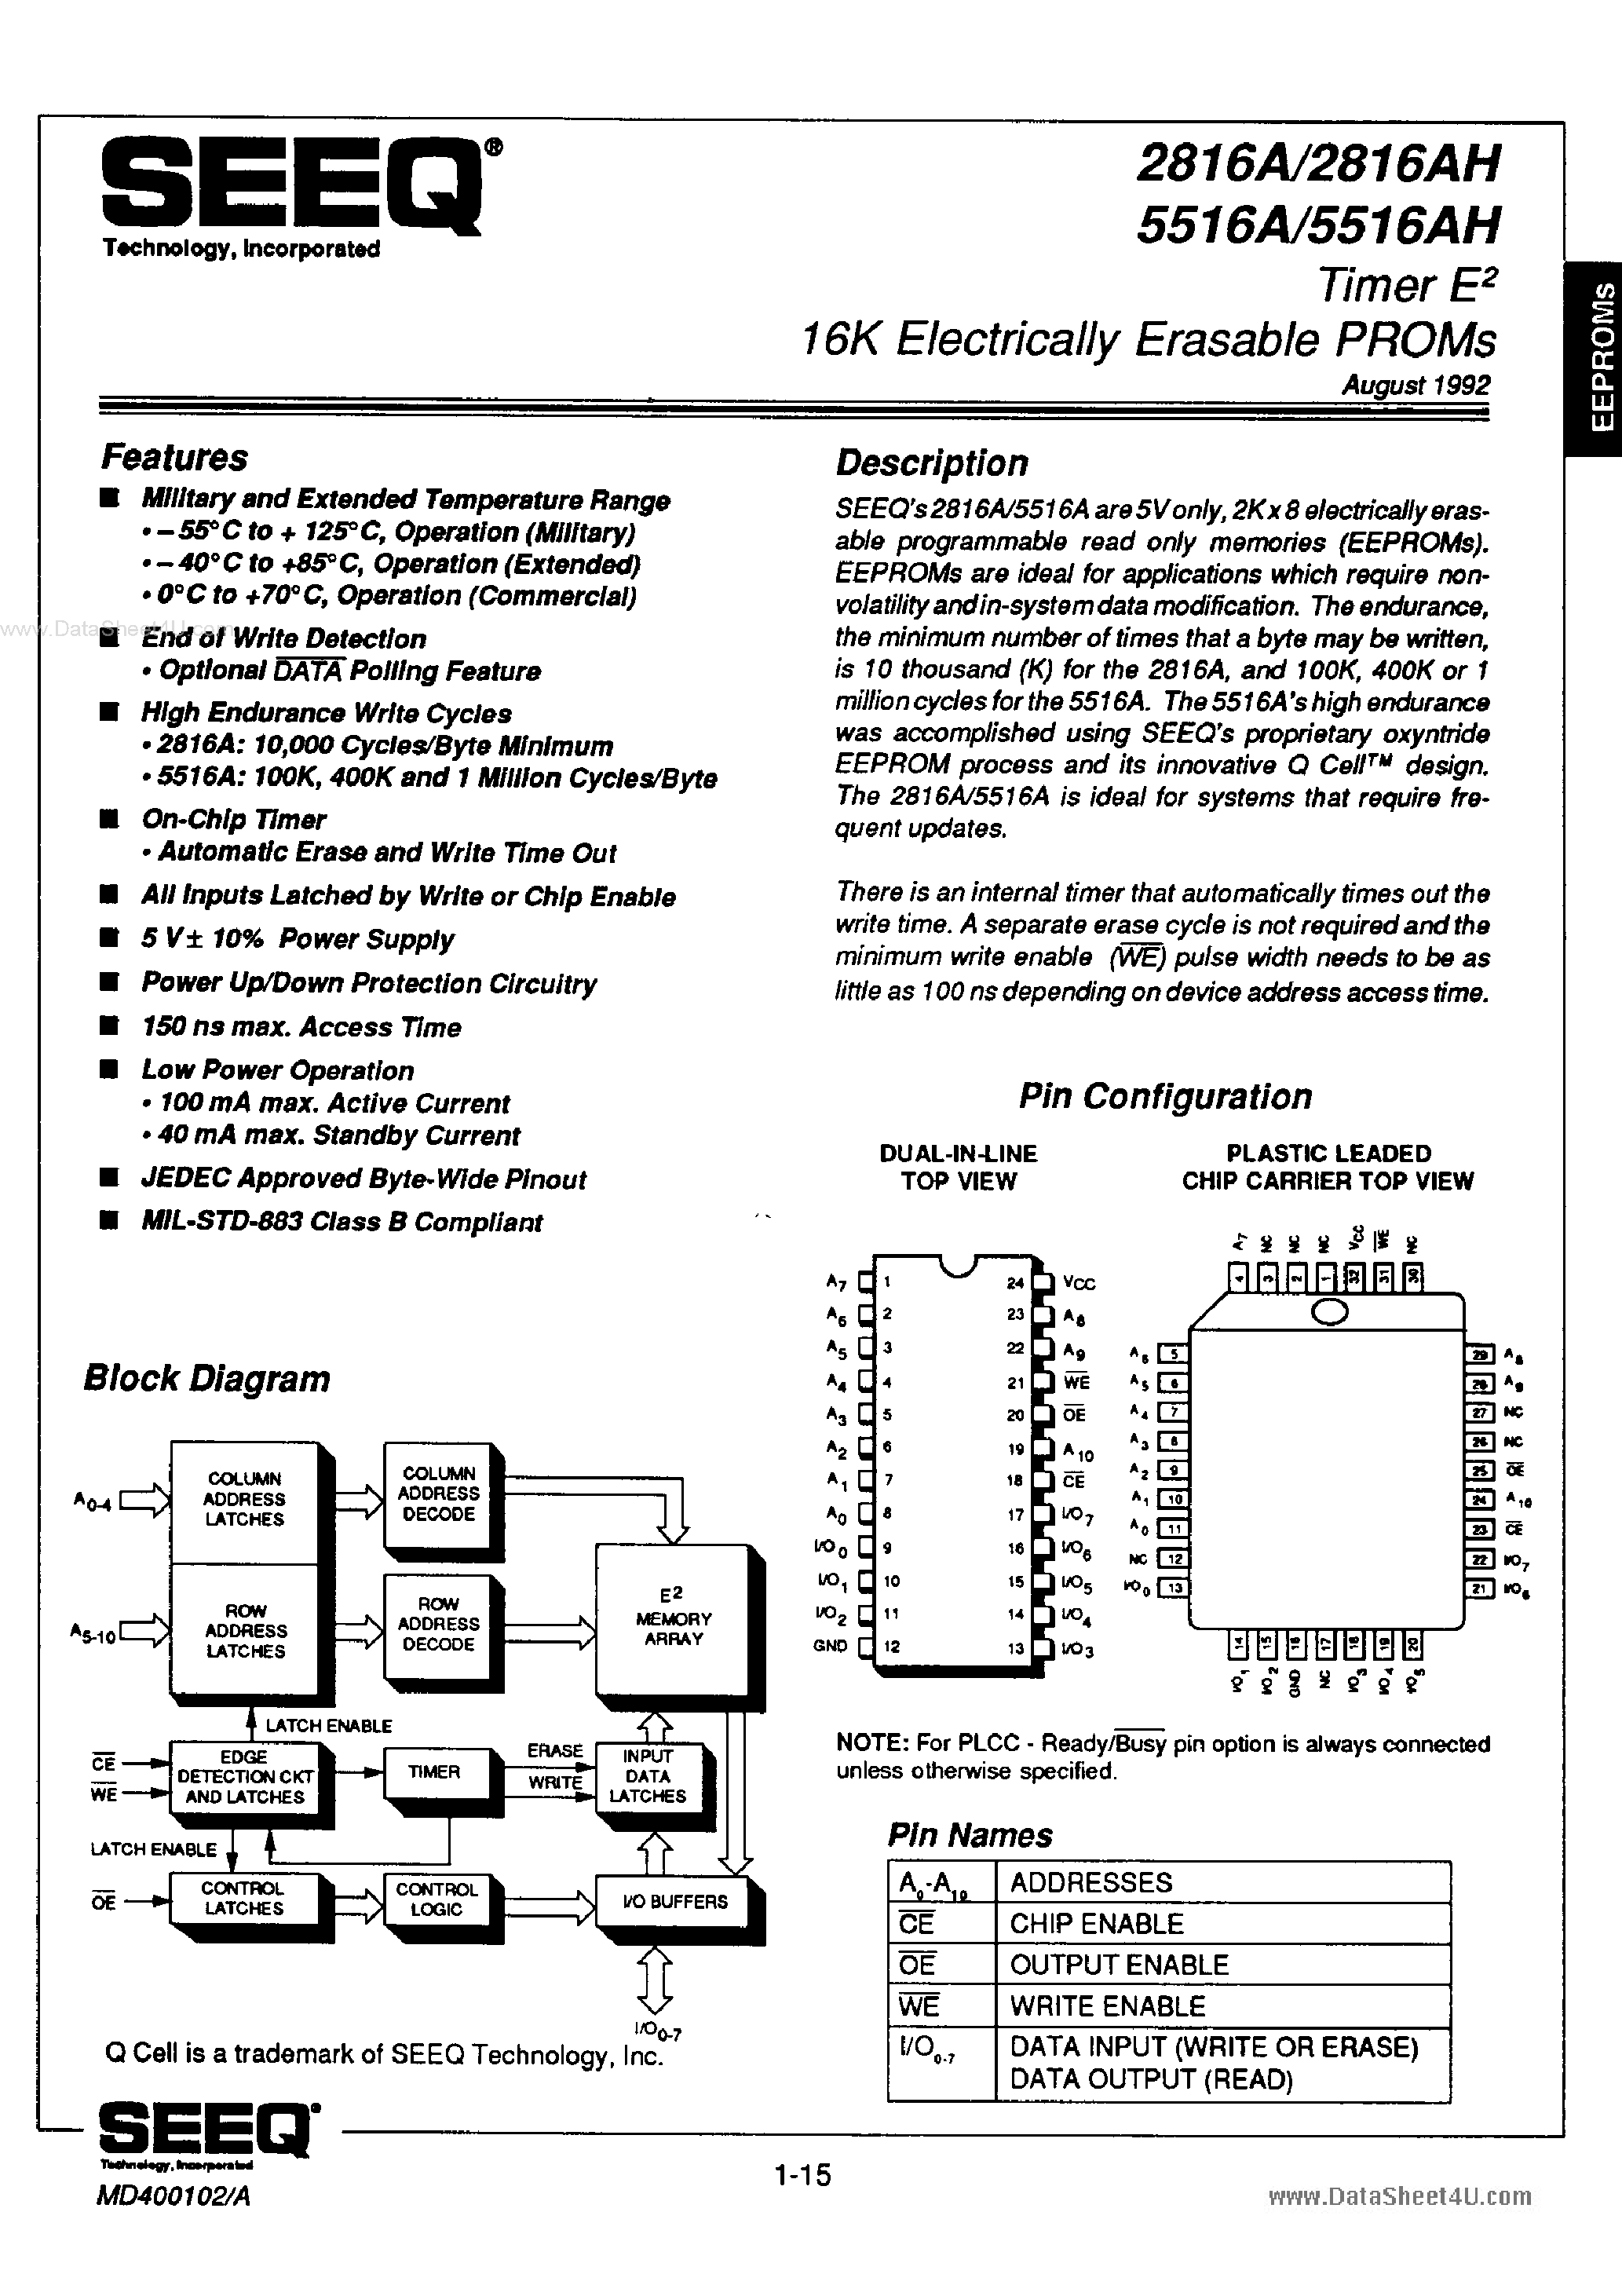 Datasheet DM2816A - Timer E2 16K Electrically Erasable PROMs page 1